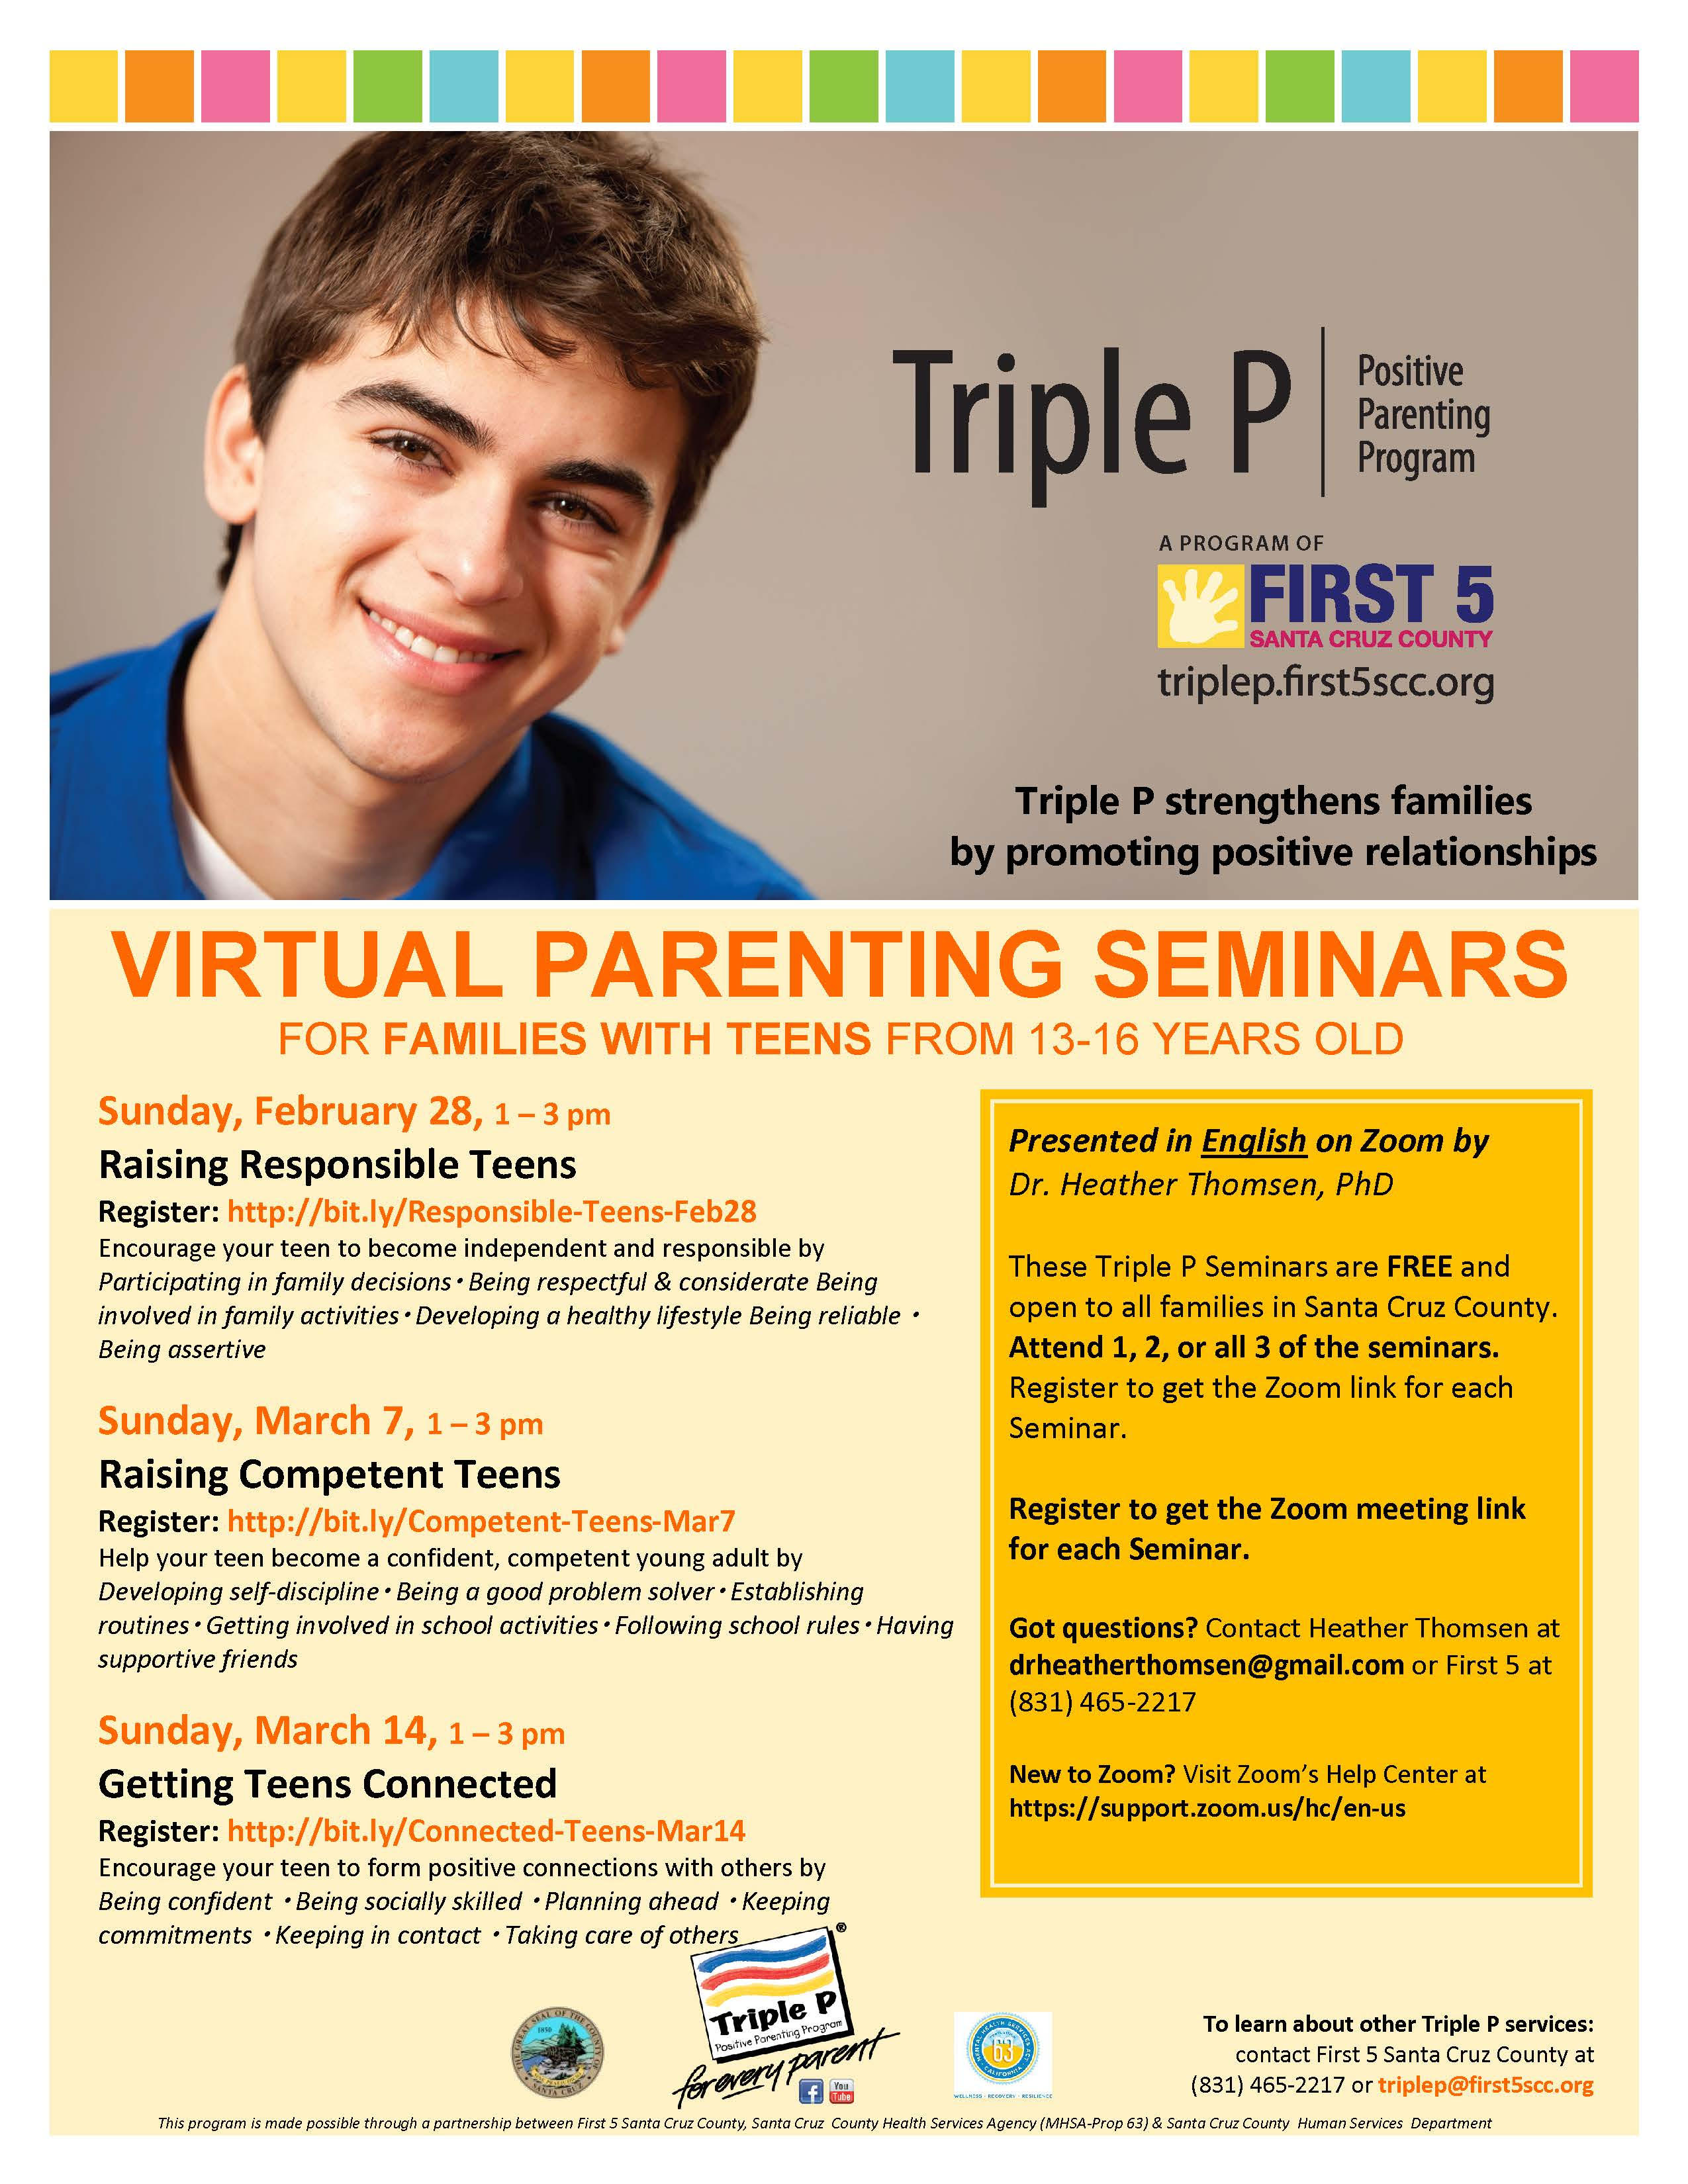 triple p parenting seminars call 831-465-2217 for details